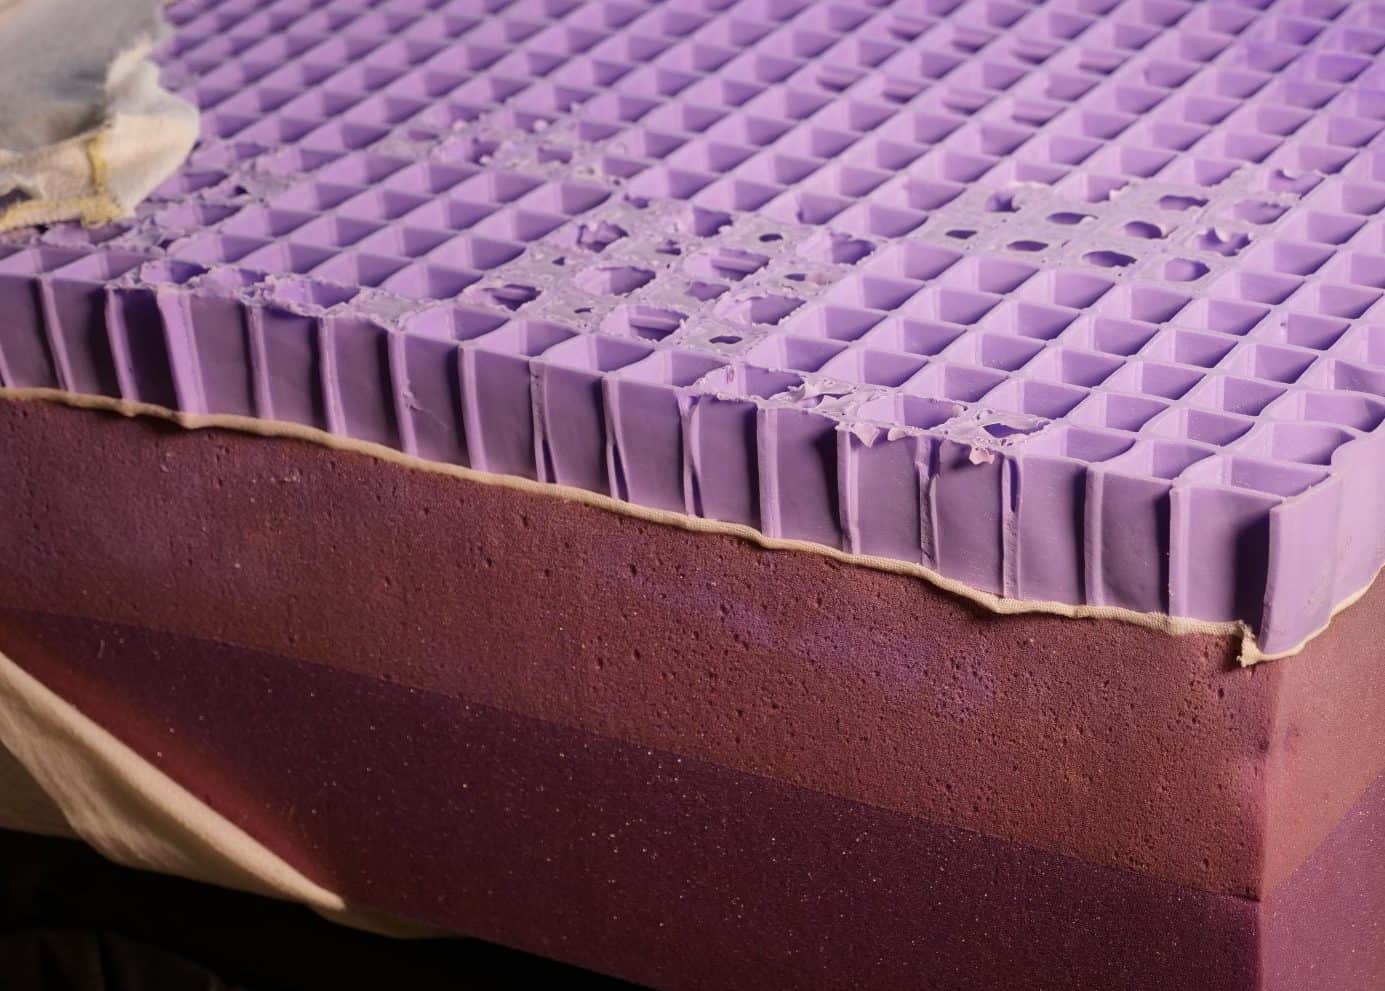 off brand mattress similar to purple 2